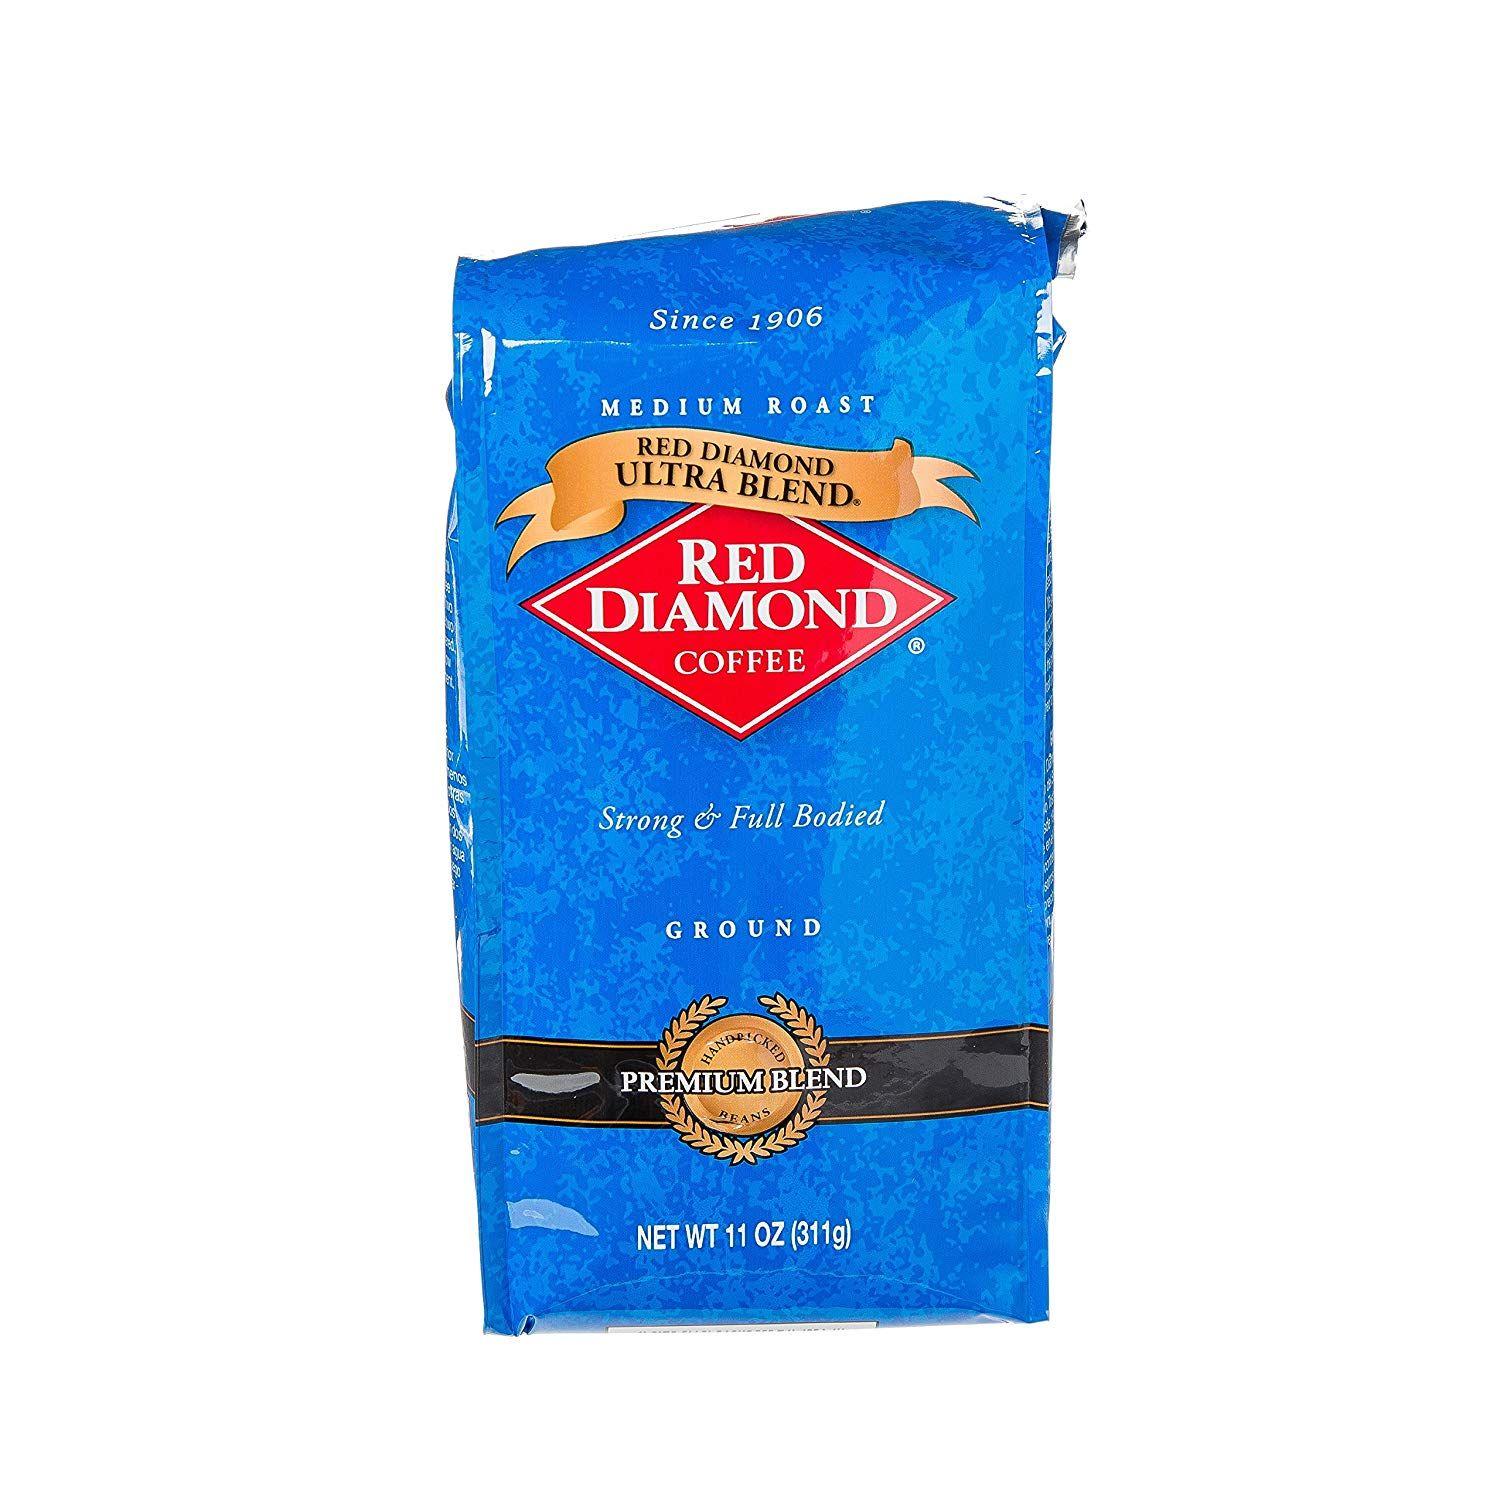 Red Diamond Coffee Logo - Amazon.com : Red Diamond Ultra Blend Ground Coffee, 11 Ounce